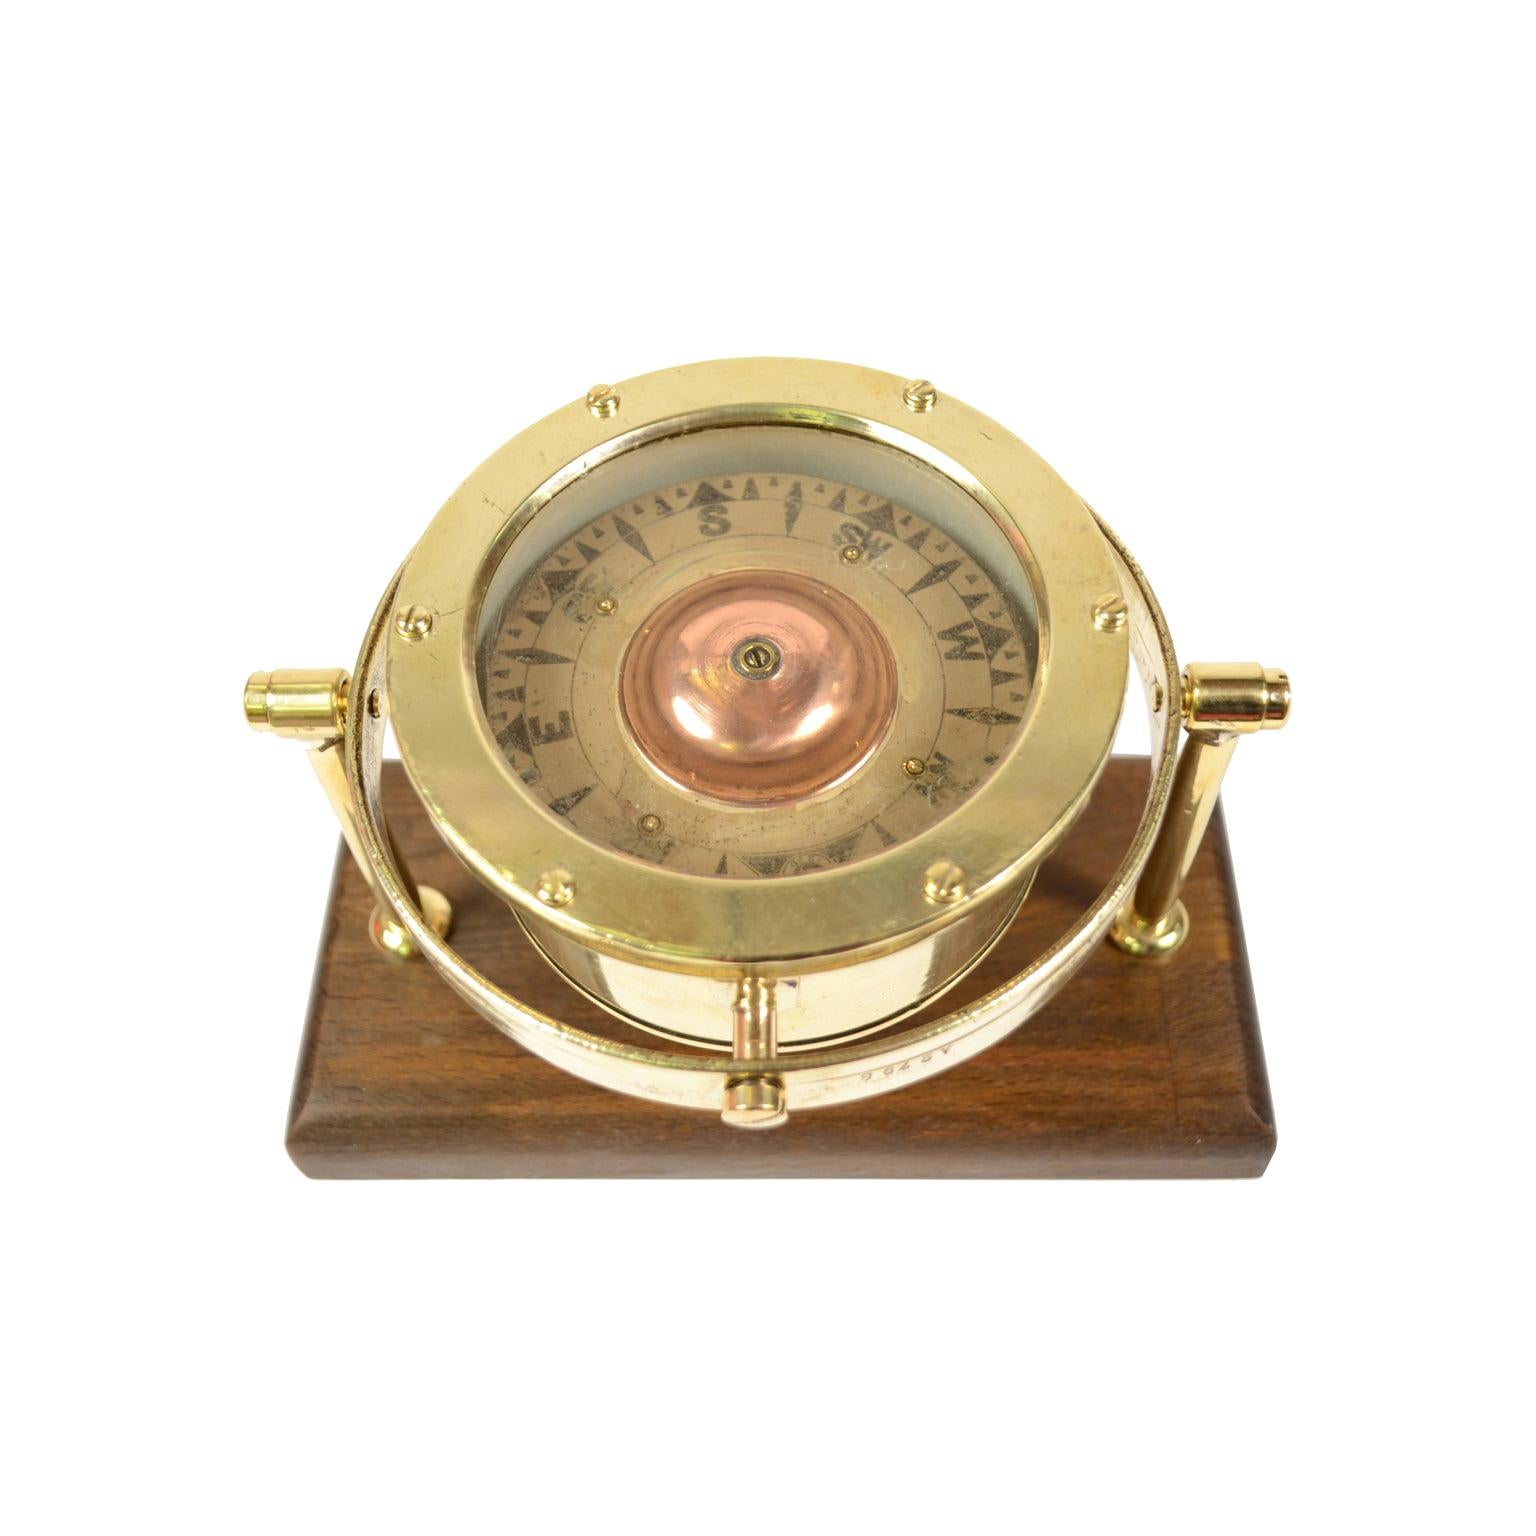 Nautical Compass signed Sestrel, UK, 1876